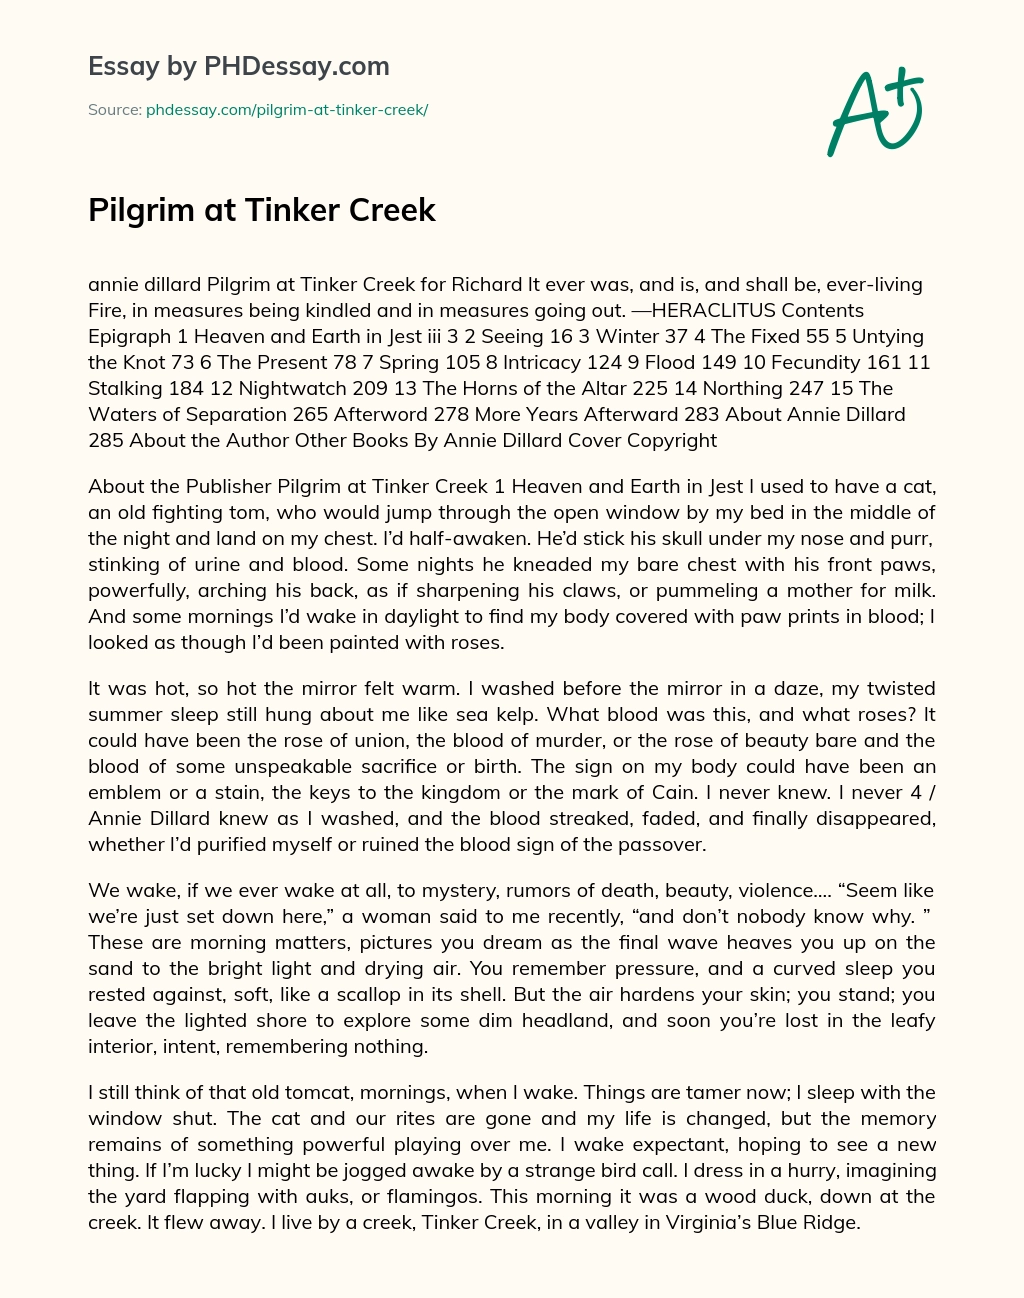 Pilgrim at Tinker Creek essay